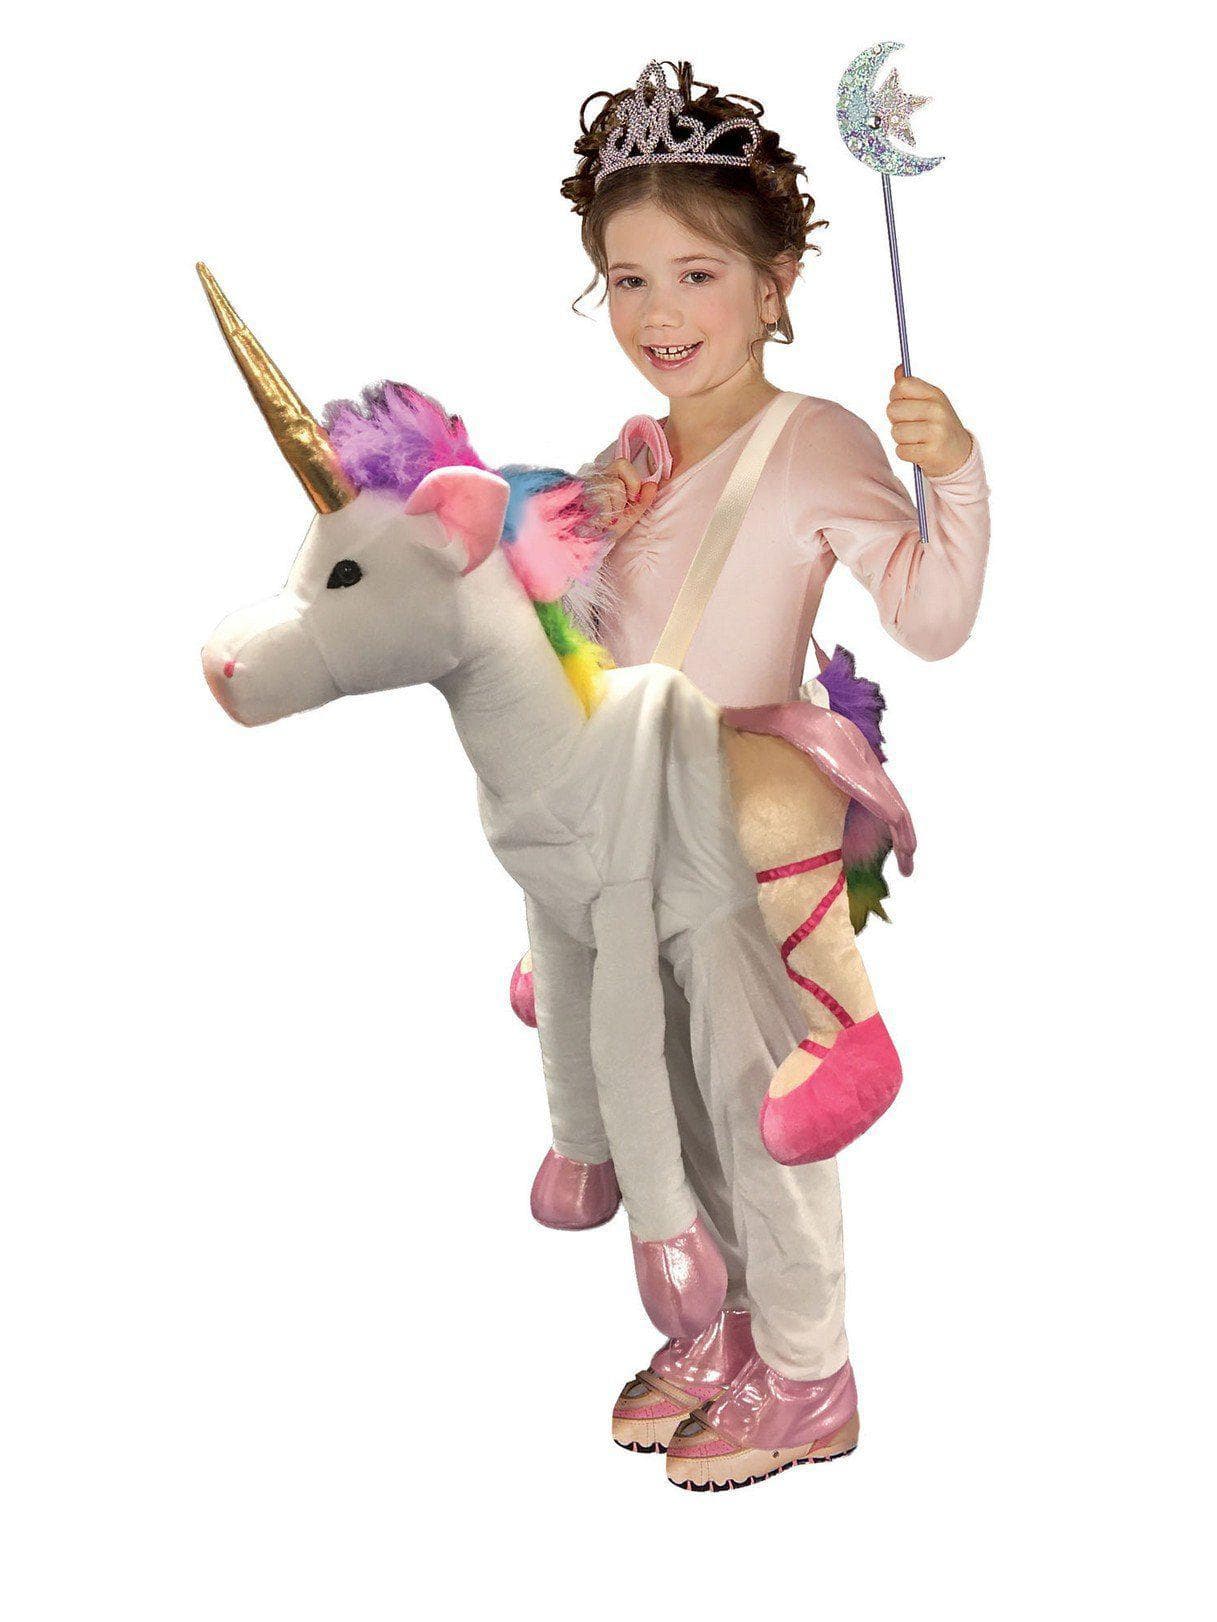 Kid's Ride On Unicorn Costume - costumes.com